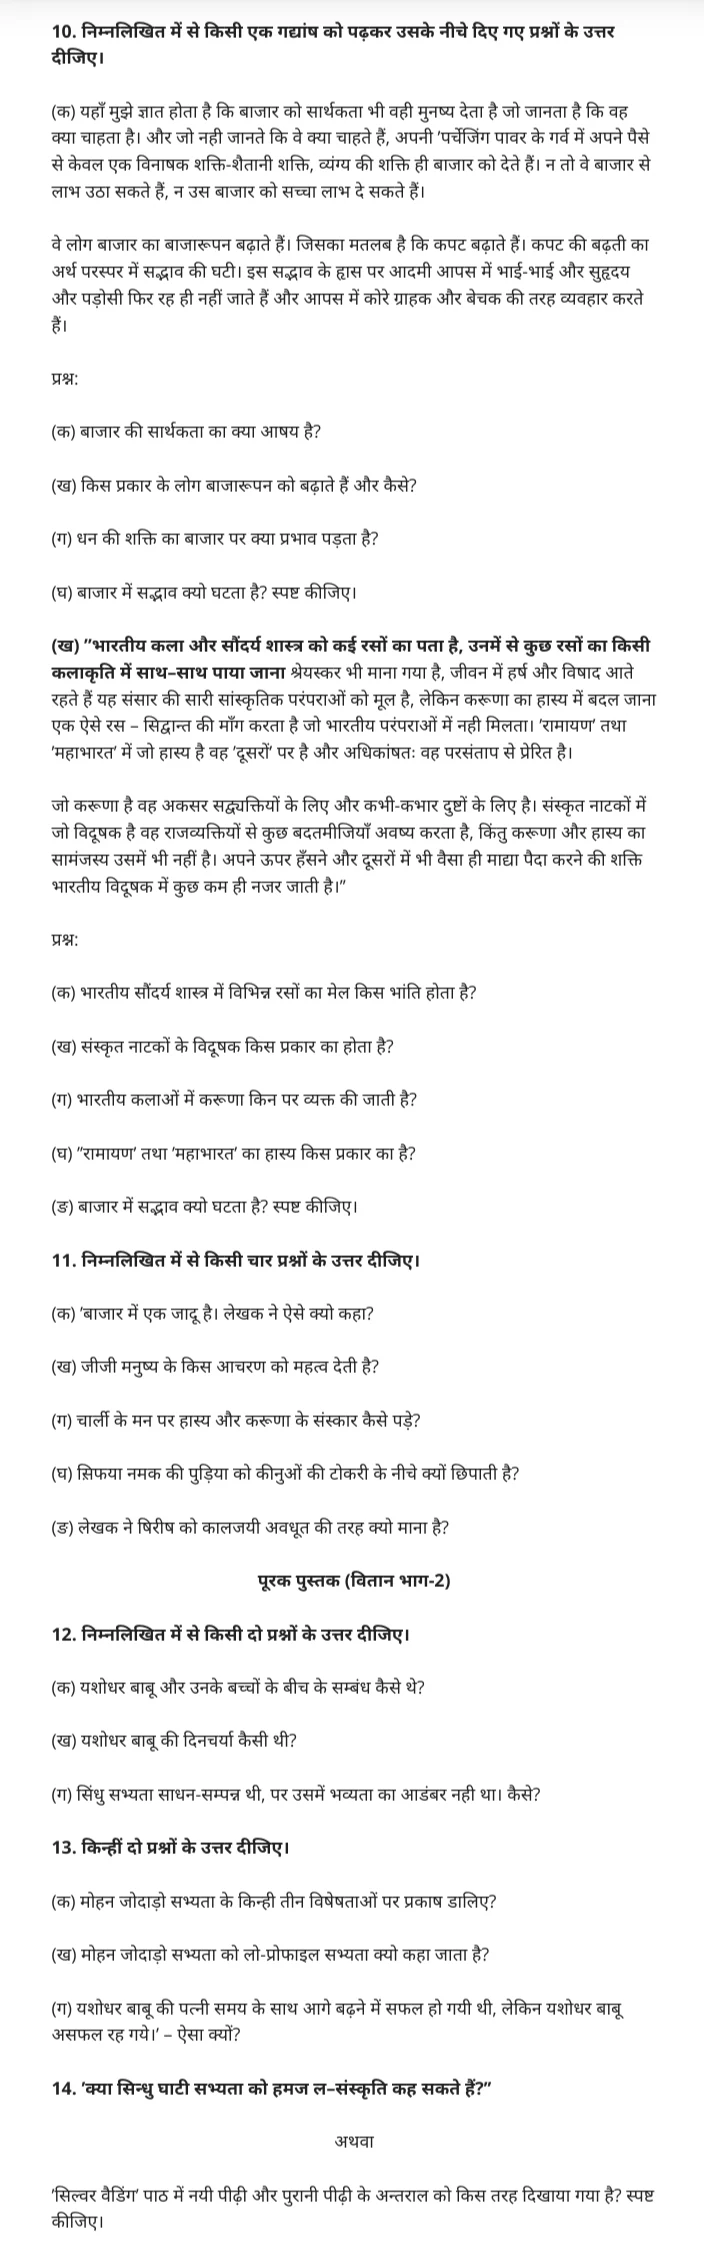 AHSEC Class 12 - Hindi (MIL) 2019 Question Paper | Class 12 Hindi Question Paper